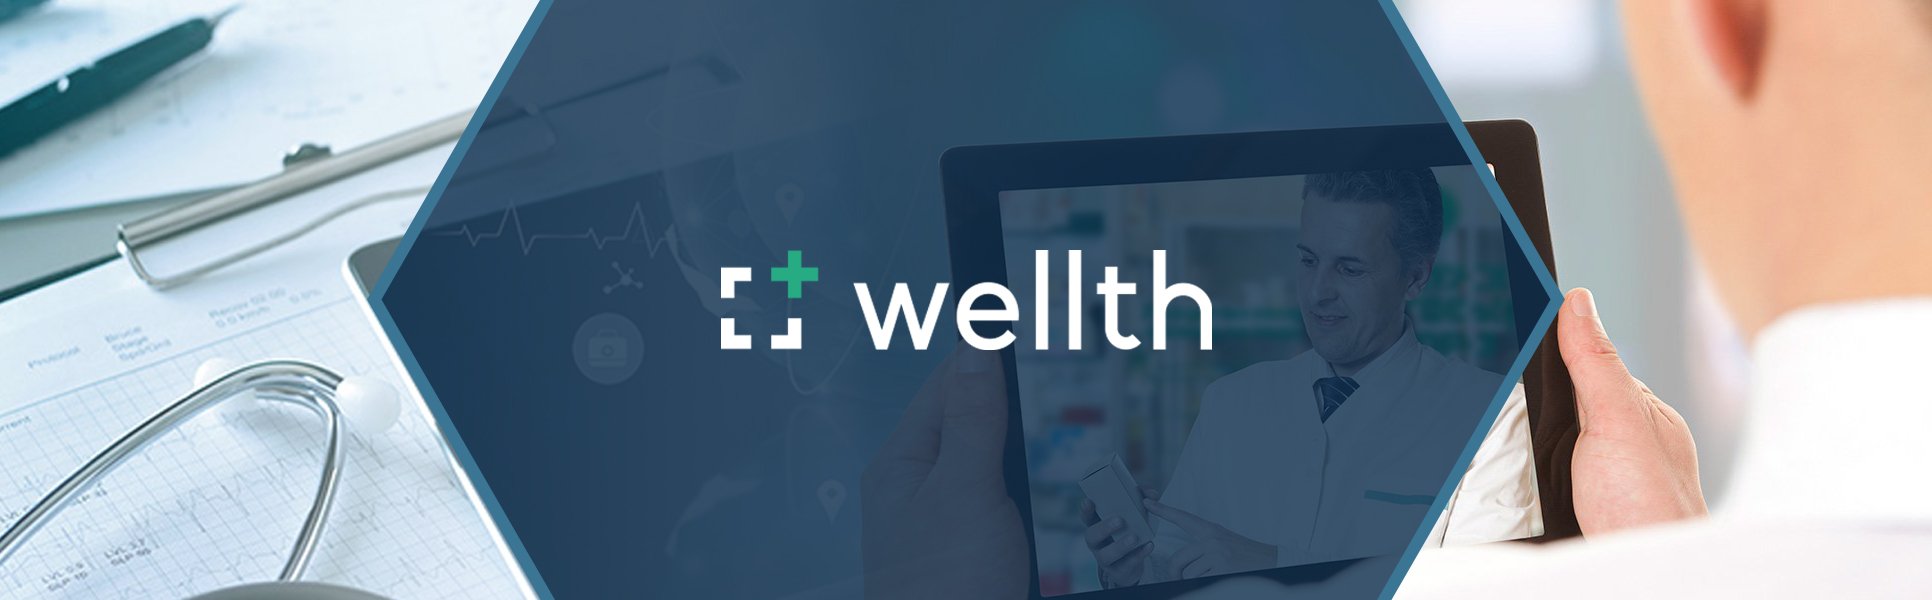 Wellth Partnership Expansion | DOHC